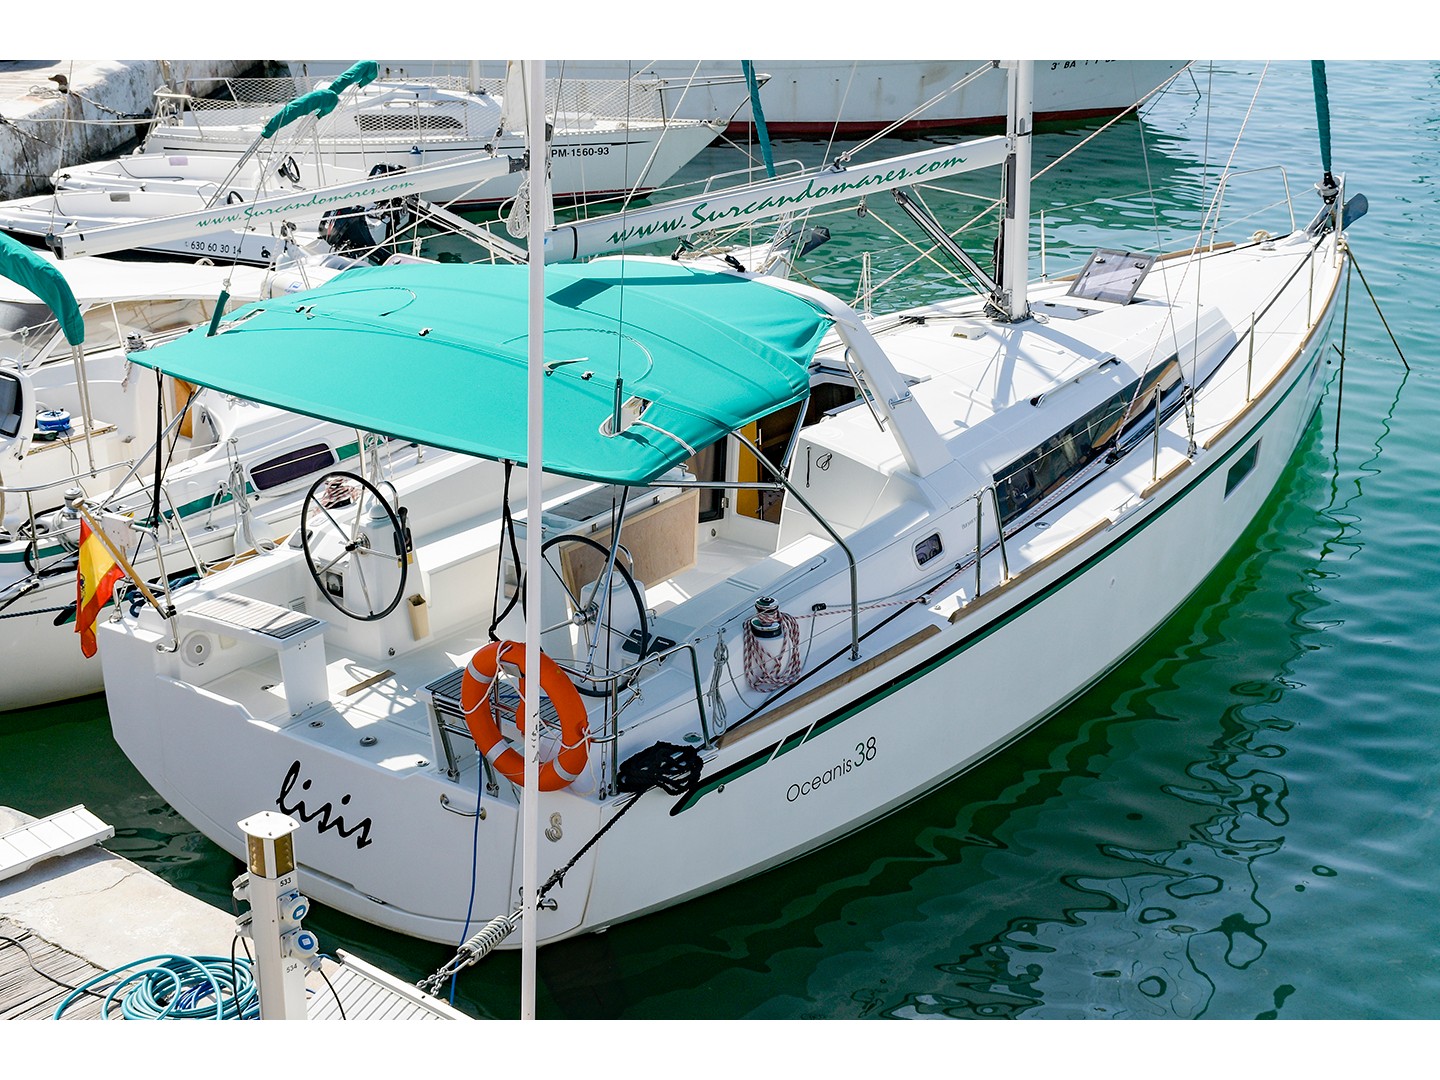 Oceanis 38 - Yacht Charter Sitges & Boat hire in Spain Catalonia Costa Brava Barcelona Sitges Port d'Aiguadolç 2